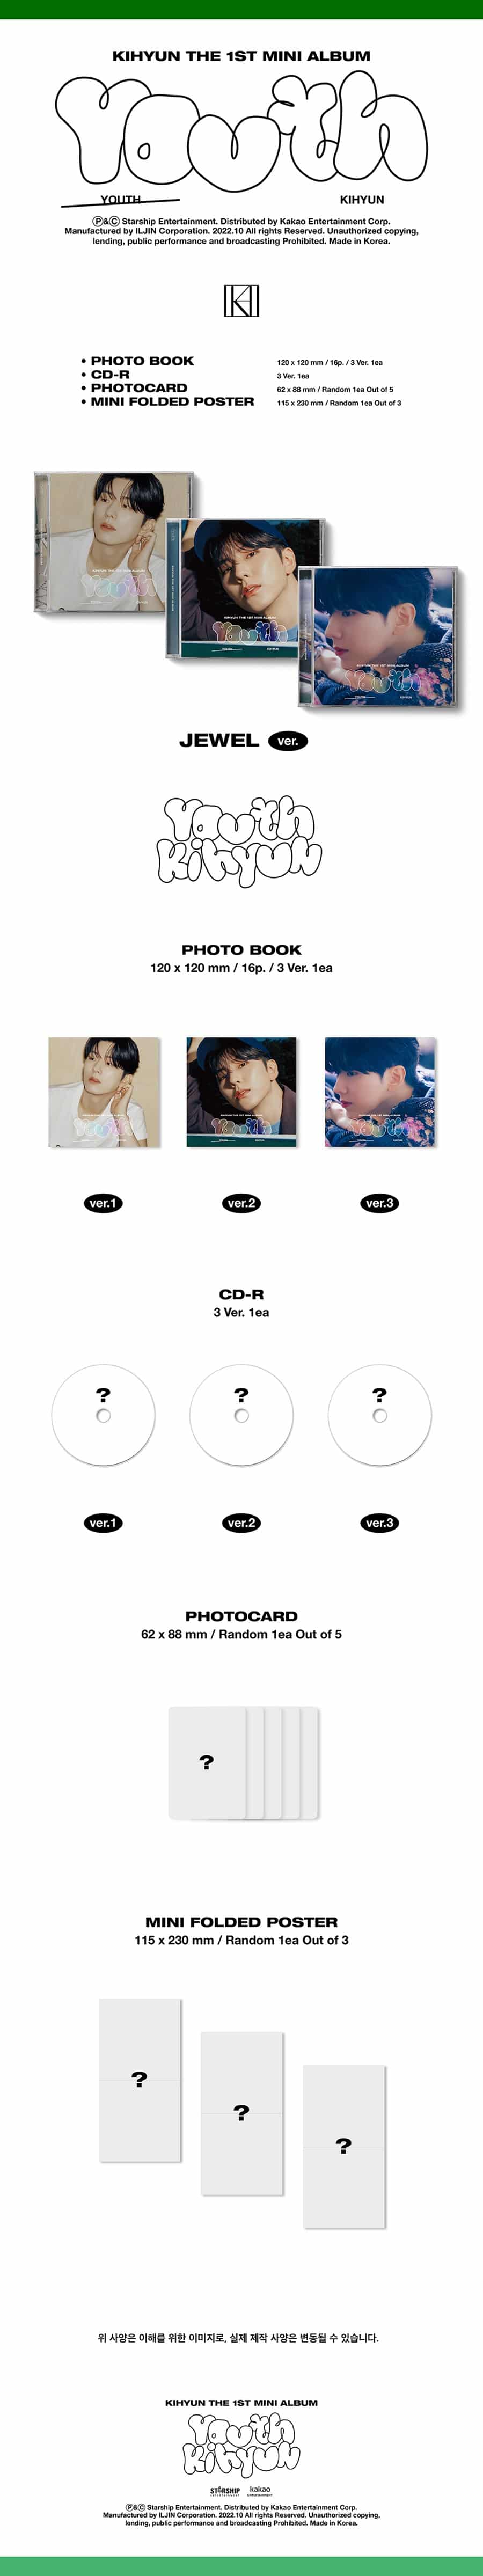 kihyun-1st-mini-album-youth-jewel-ver-wholesales